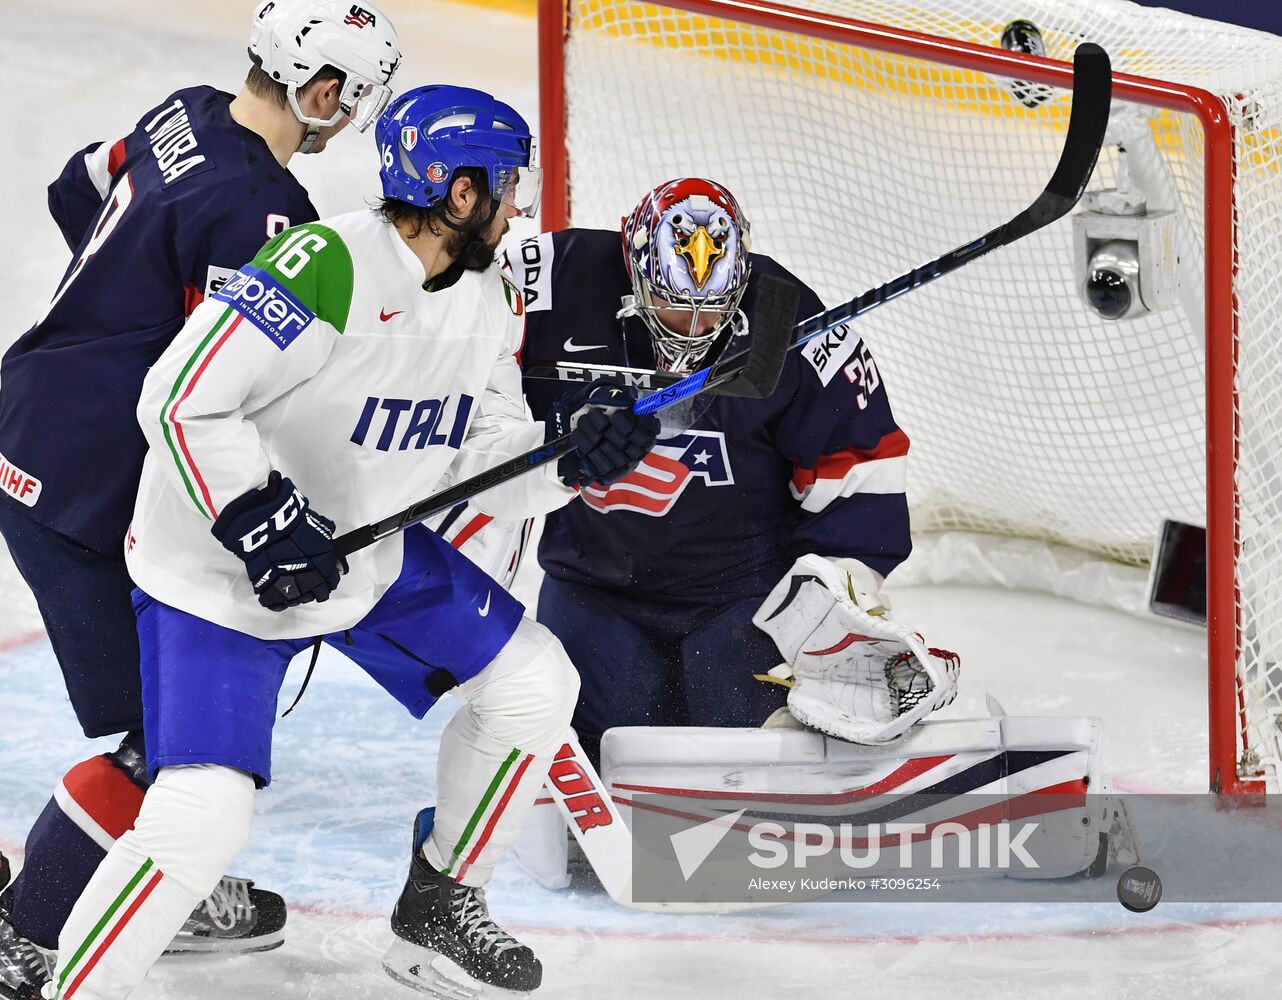 Ice Hockey World Championship. United States vs. Italy